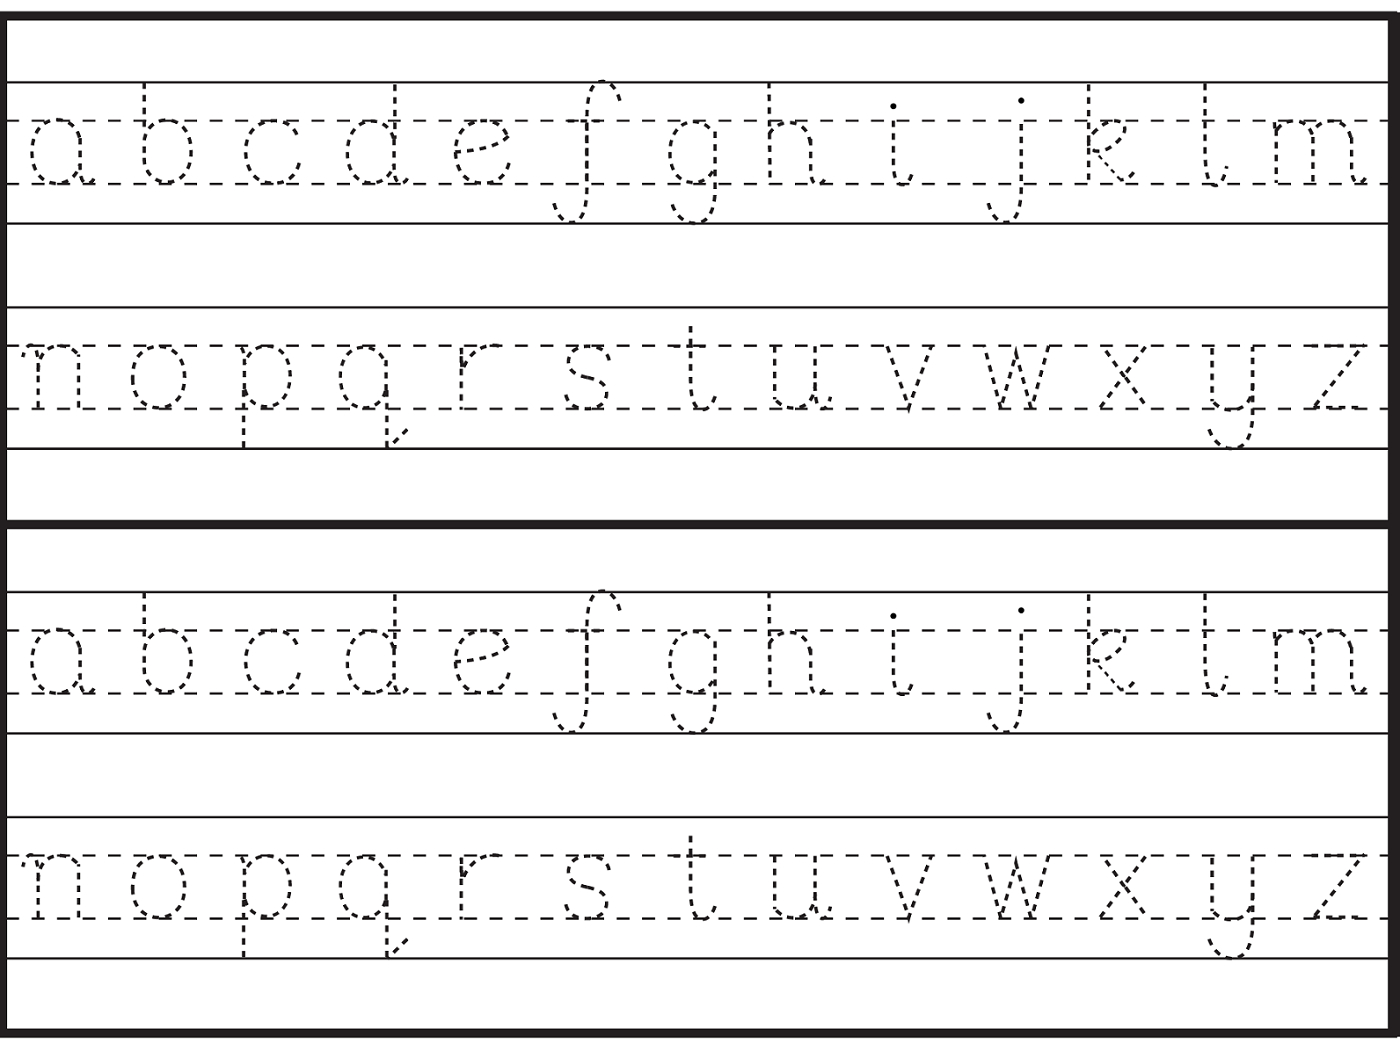 English Alphabet Worksheet For Kindergarten | Alphabet intended for Alphabet Tracing Handout